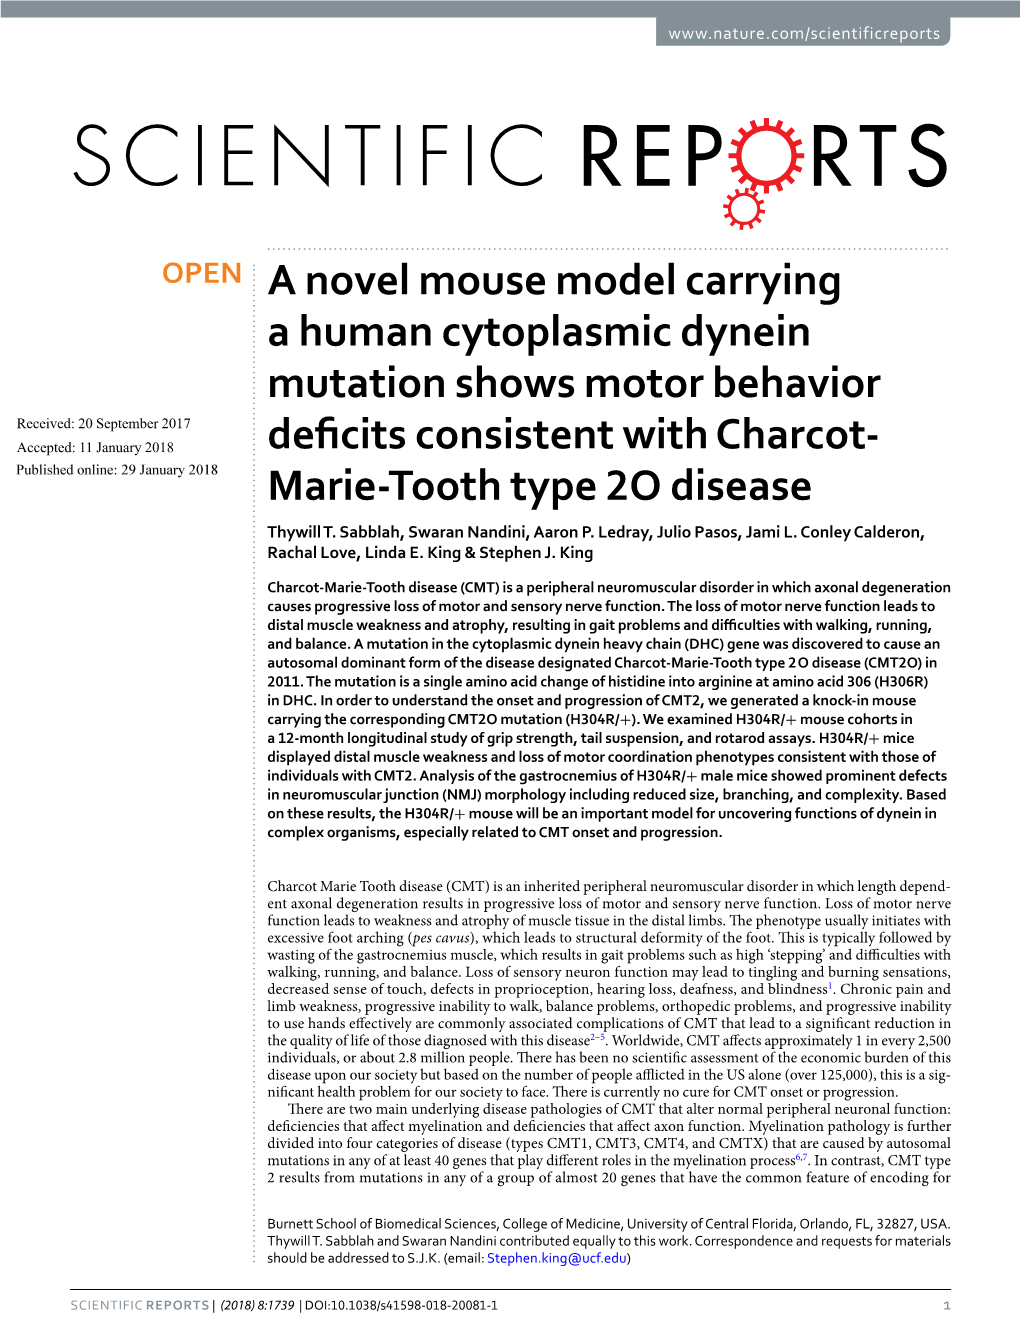 A Novel Mouse Model Carrying a Human Cytoplasmic Dynein Mutation